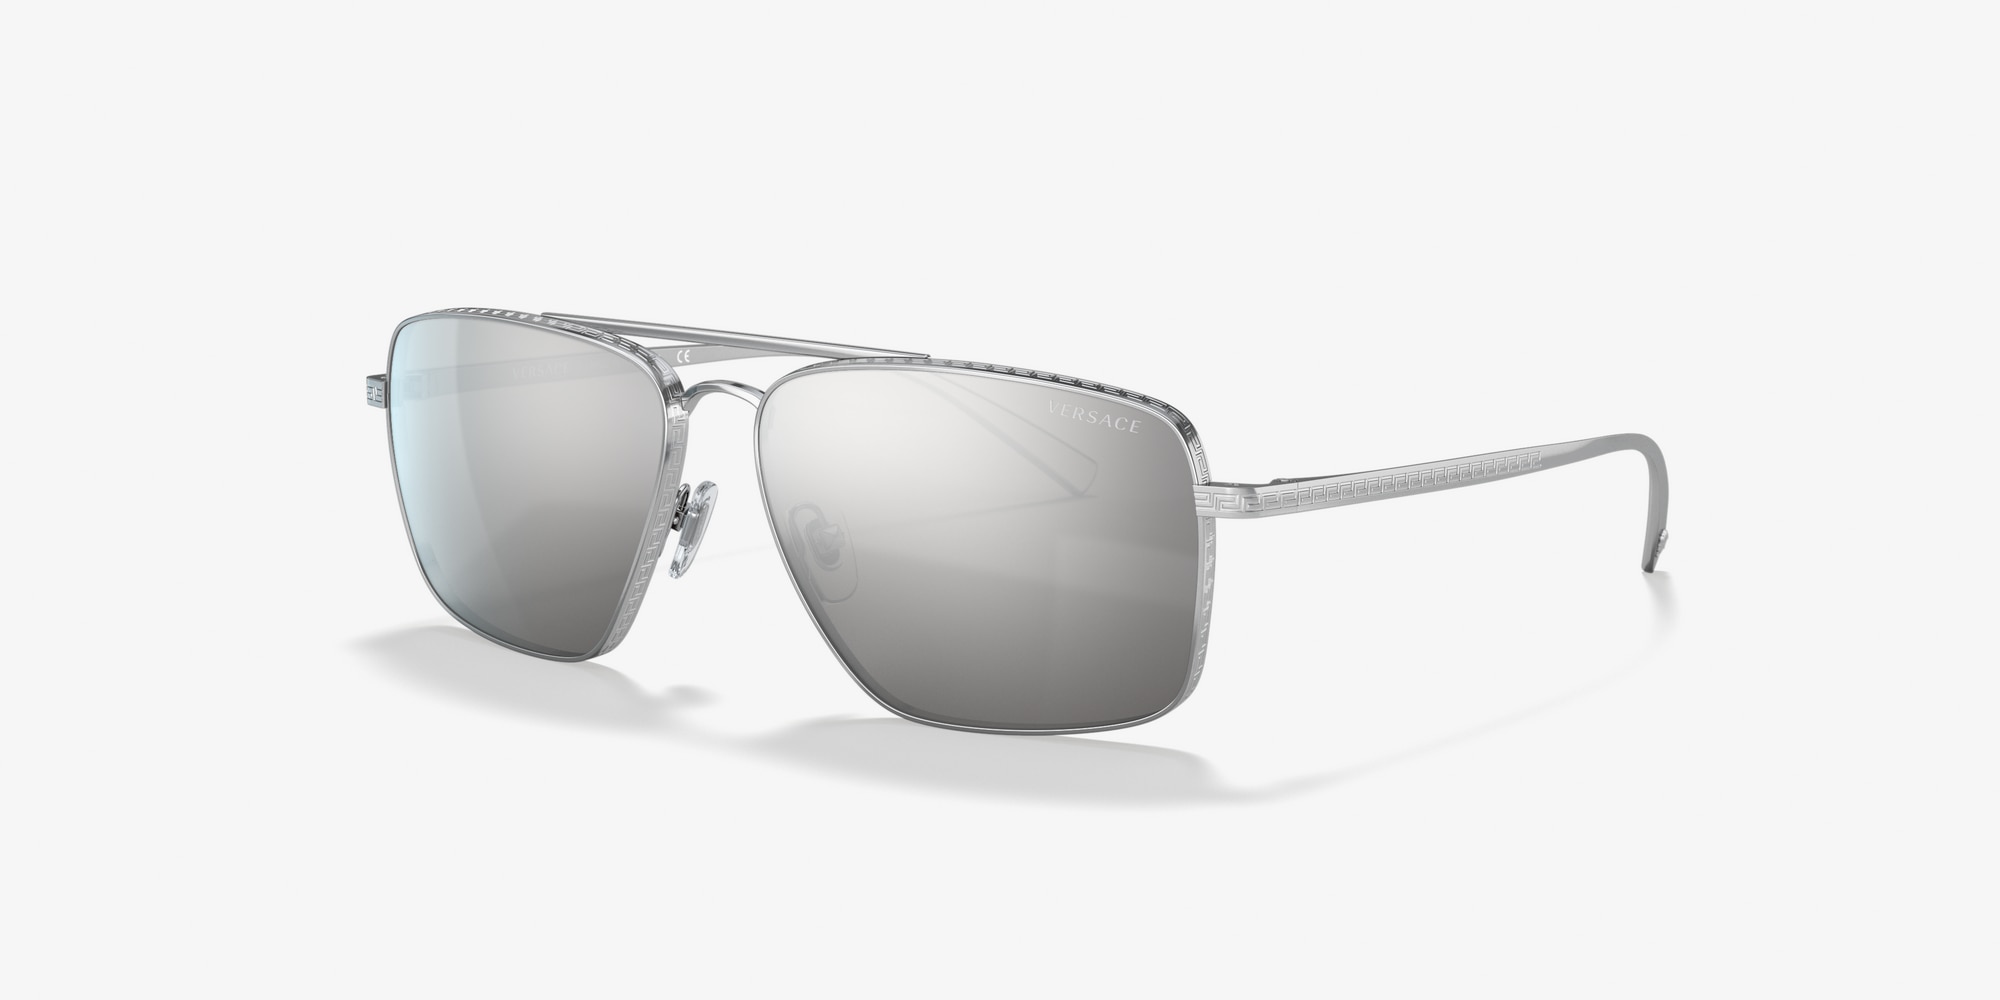 silver versace sunglasses